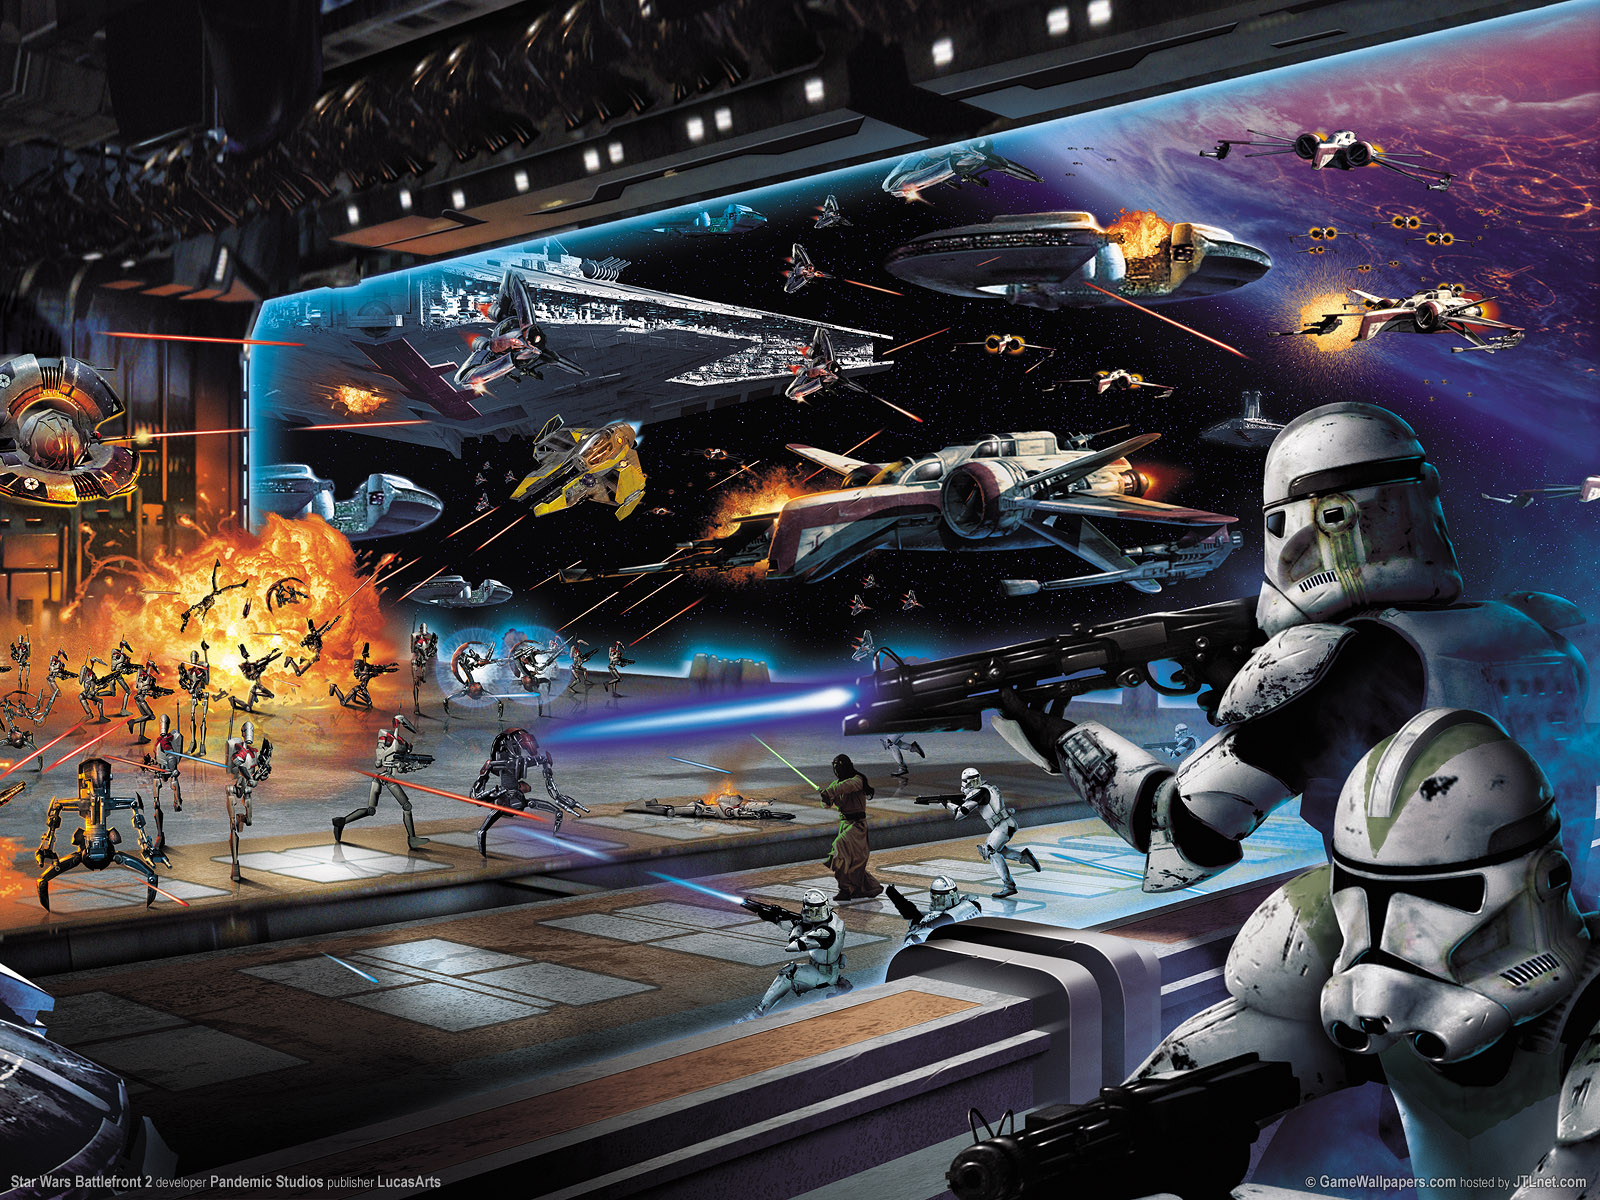 50+] Star Wars Battlefront 2 Wallpaper